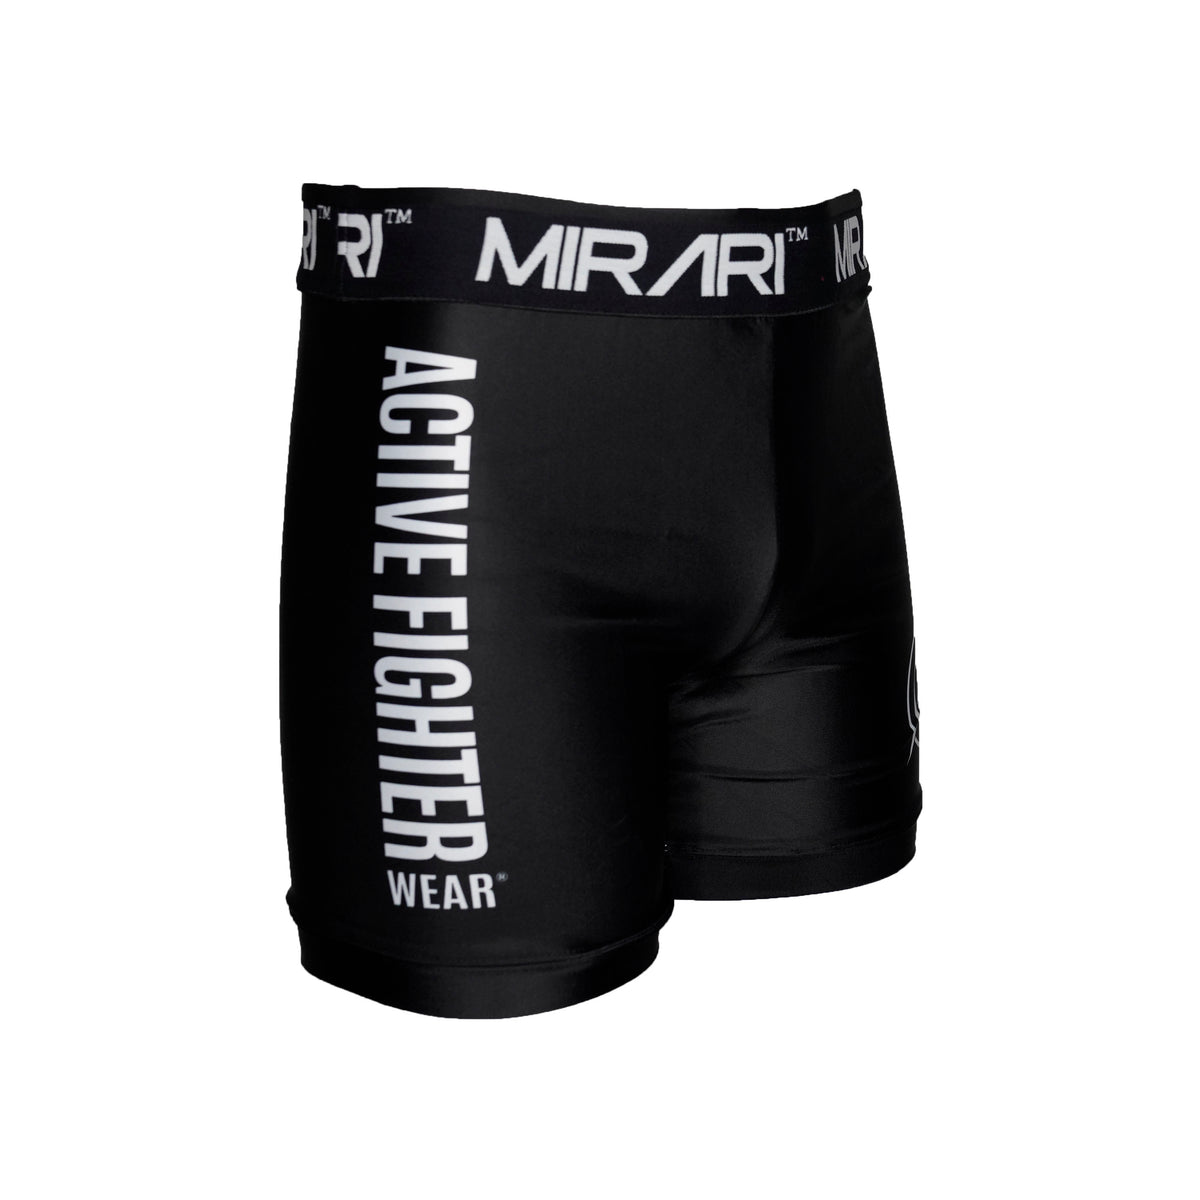 MIRARI® Combat Sports Men's Vale Tudo Compression Shorts, Black